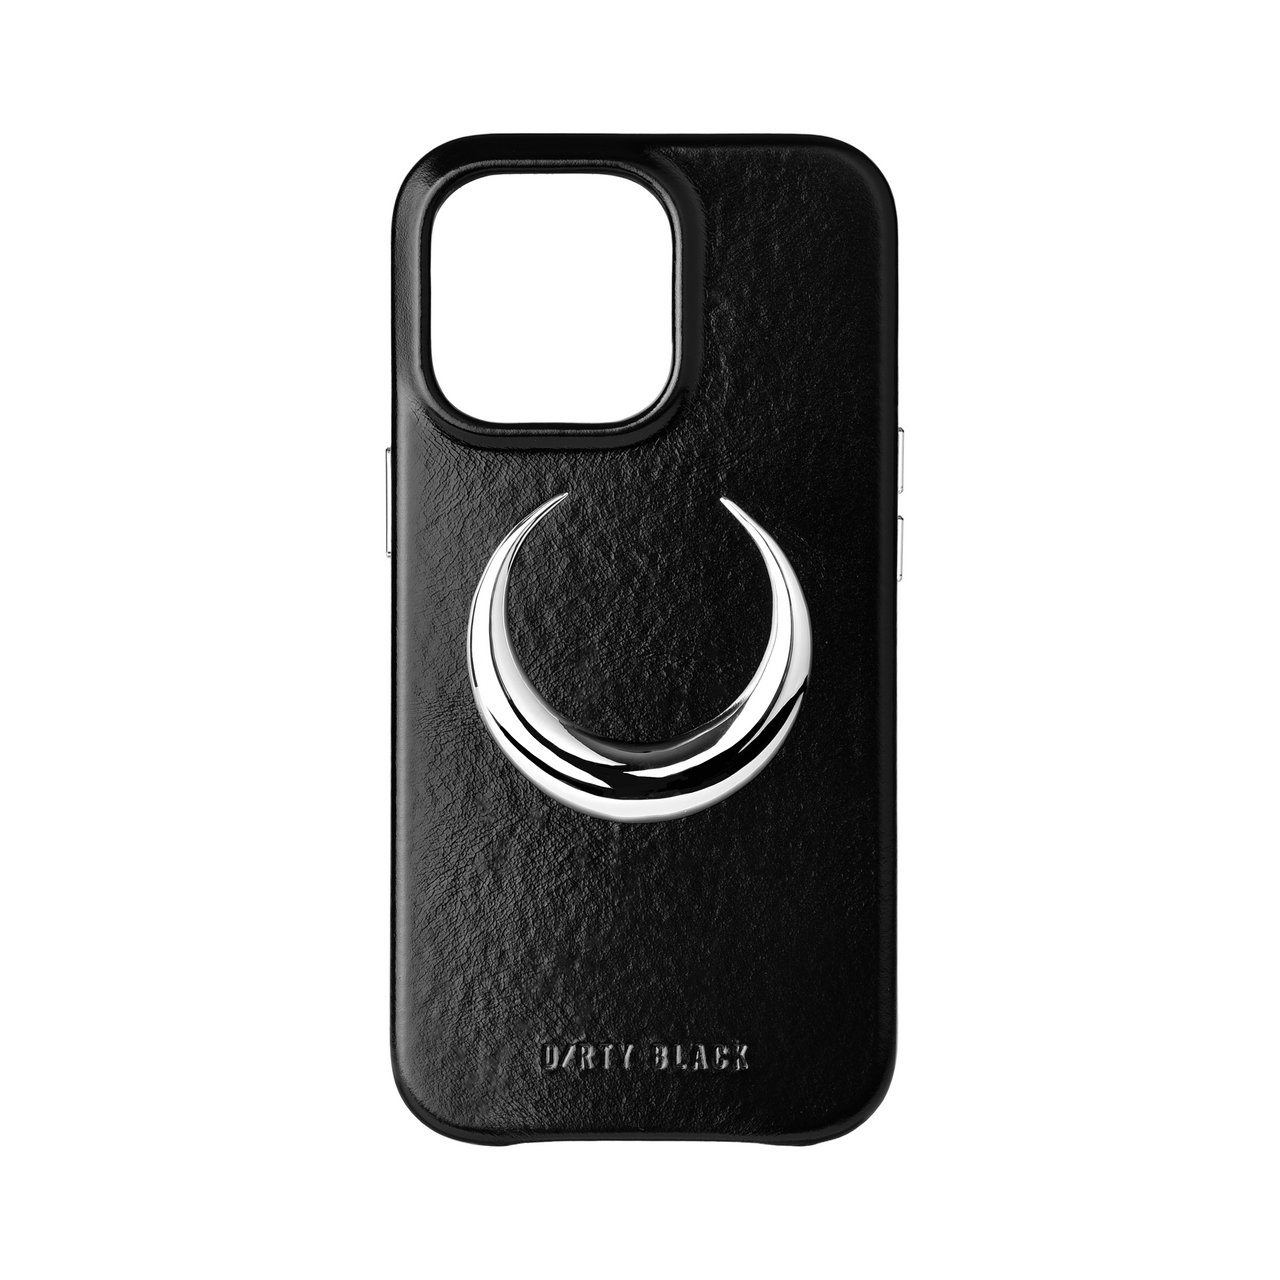 crescent black leather iphone case